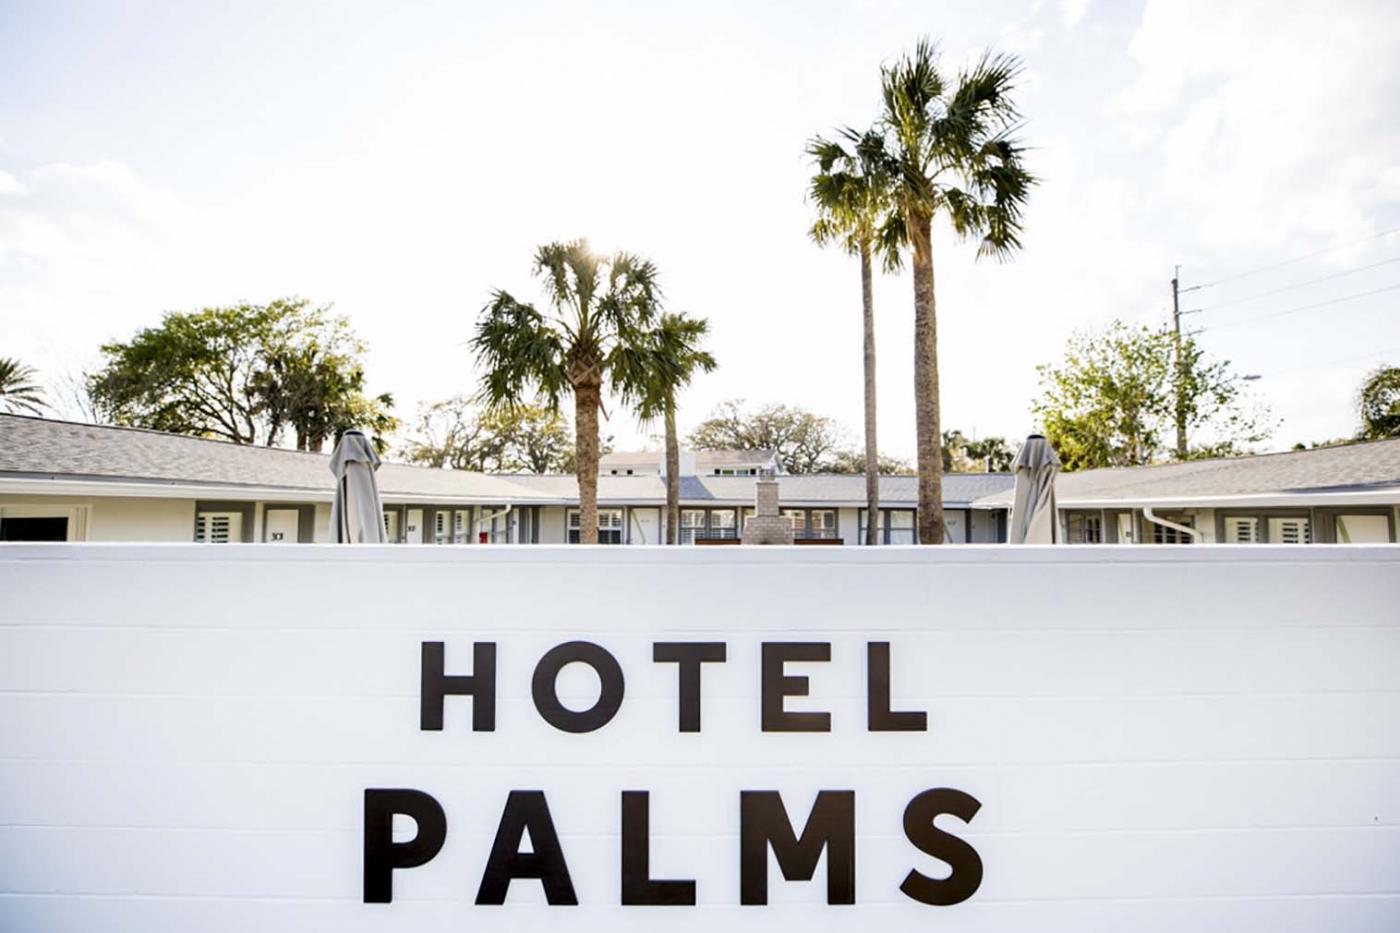 The Hotel Palms